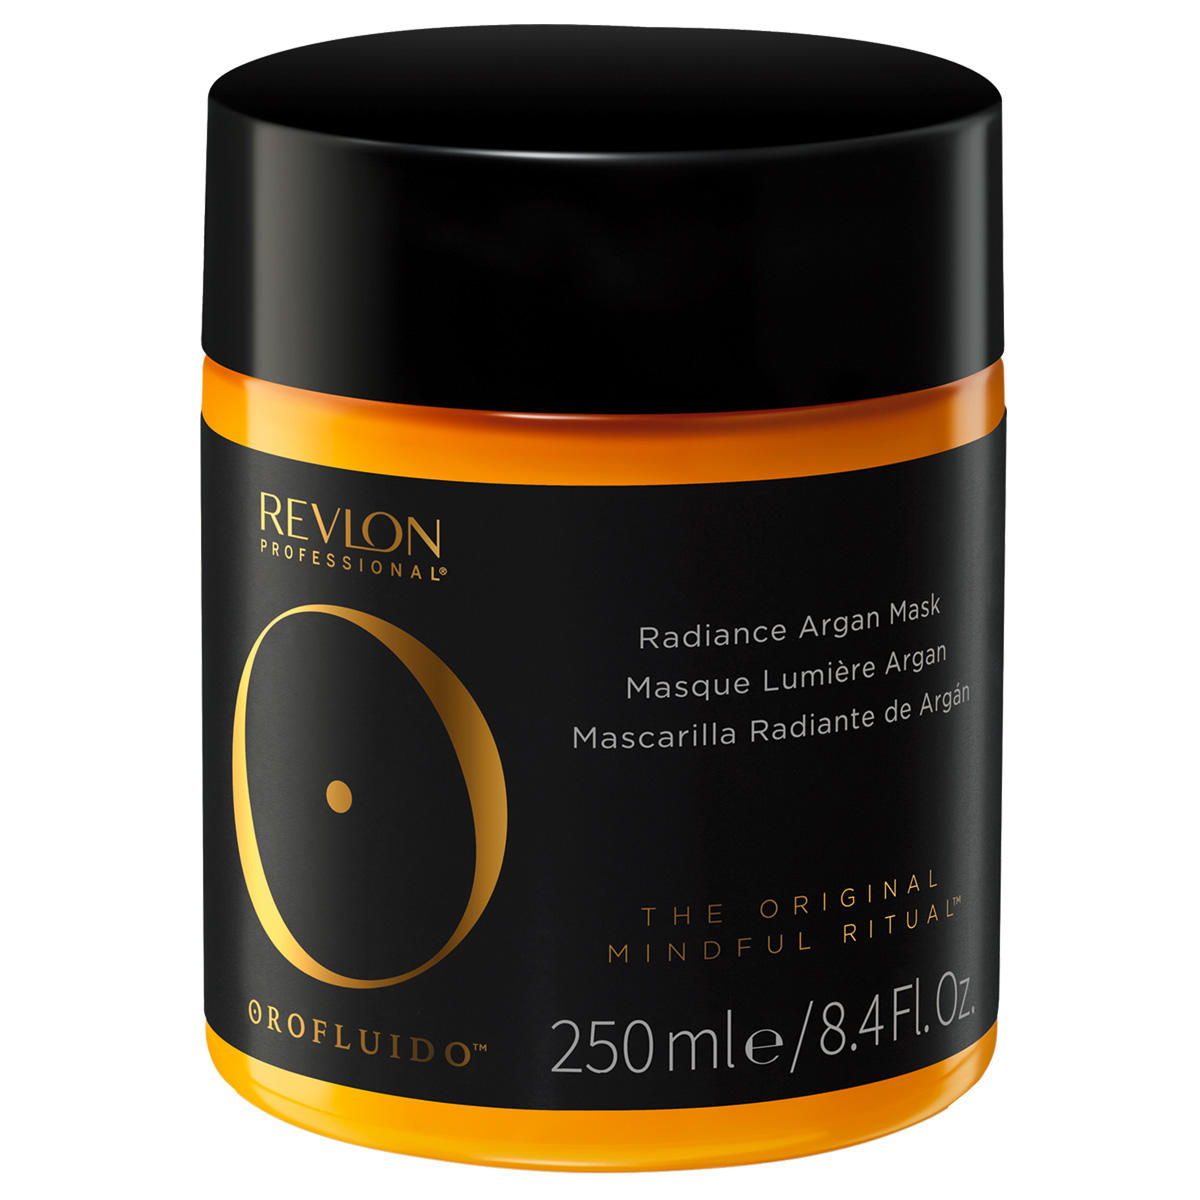 Revlon Professional OROFLUIDO Radiance Argan Mask  - 1